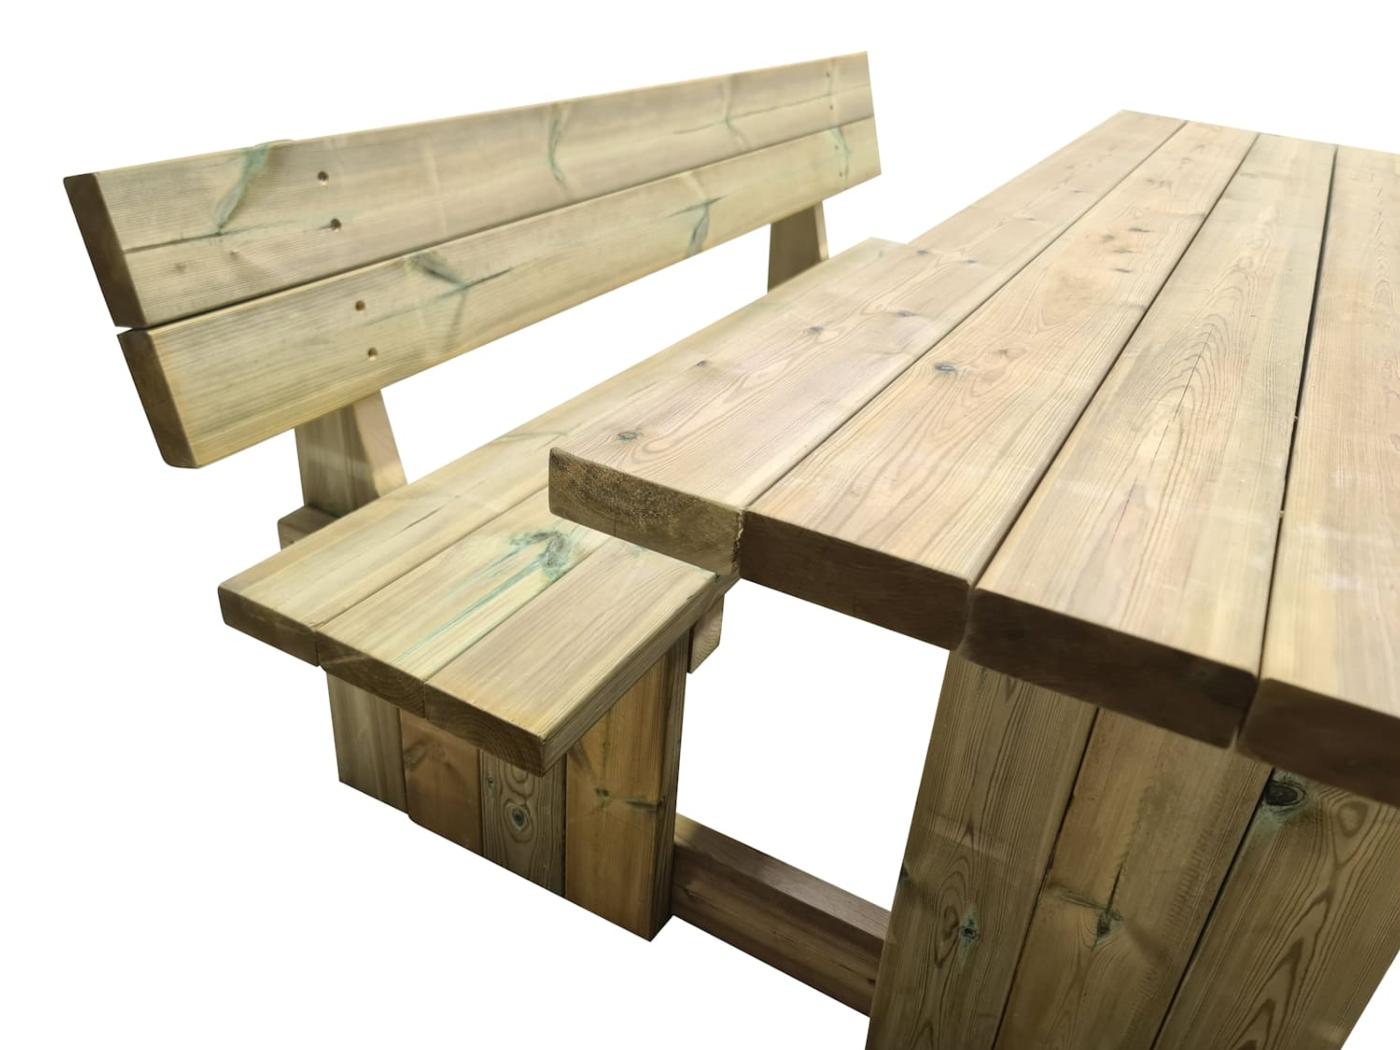 Mesa de picnic cuadrada de madera MASGAMES CANET con respaldo